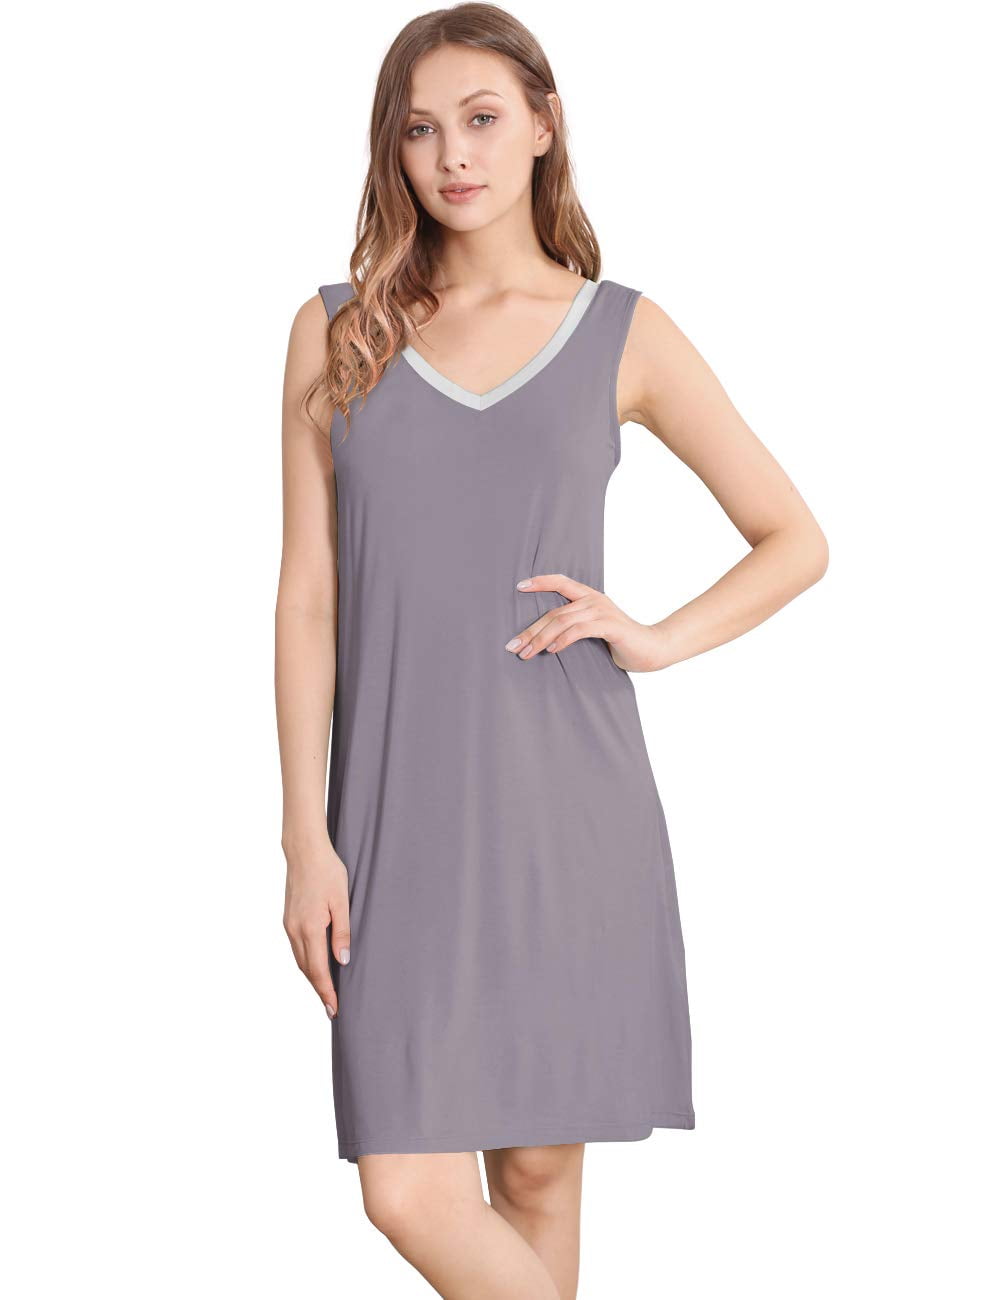 NACHILA Bamboo Nightgowns for Women Soft Sleeveless Sleepwear Racerback Chemise Sleep Dress S-4XL 